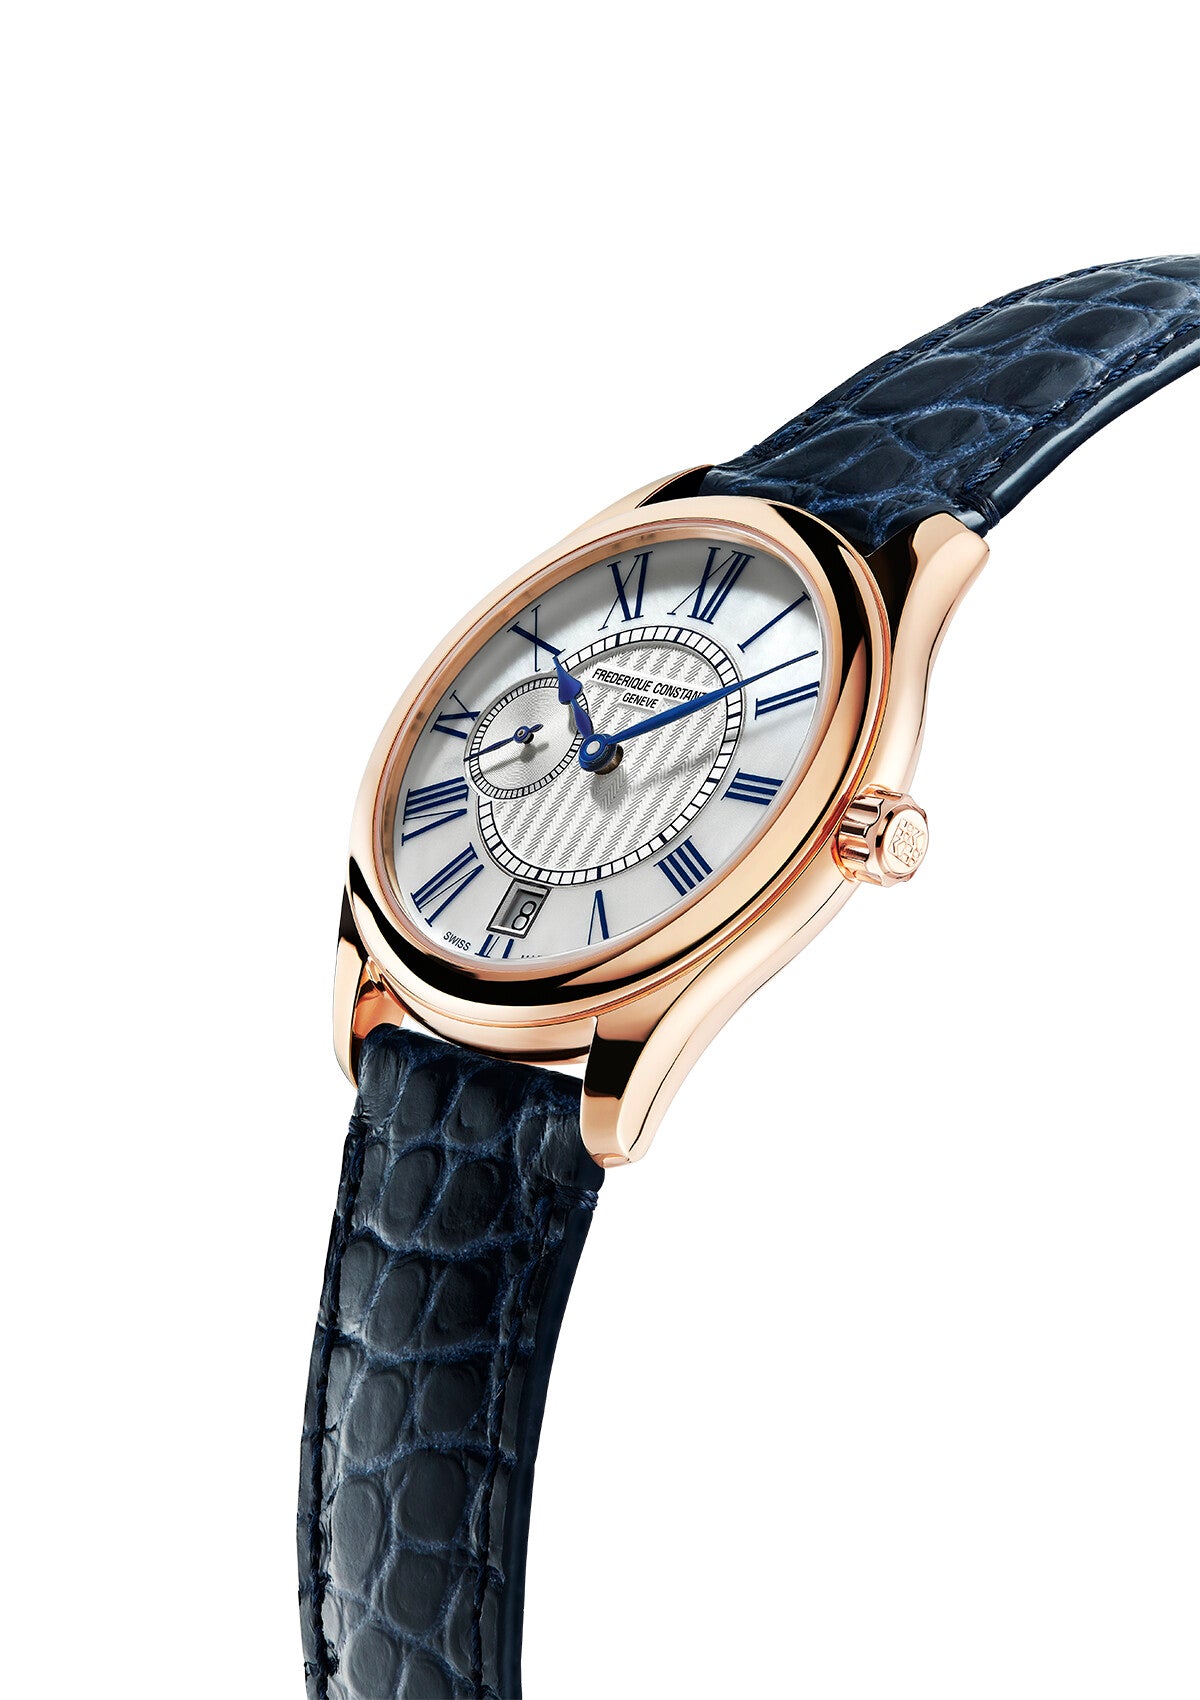 Frederique Constant Blau Leder Armband Rose Gehäuse Perlmutt Zifferblatt Automatik Uhr